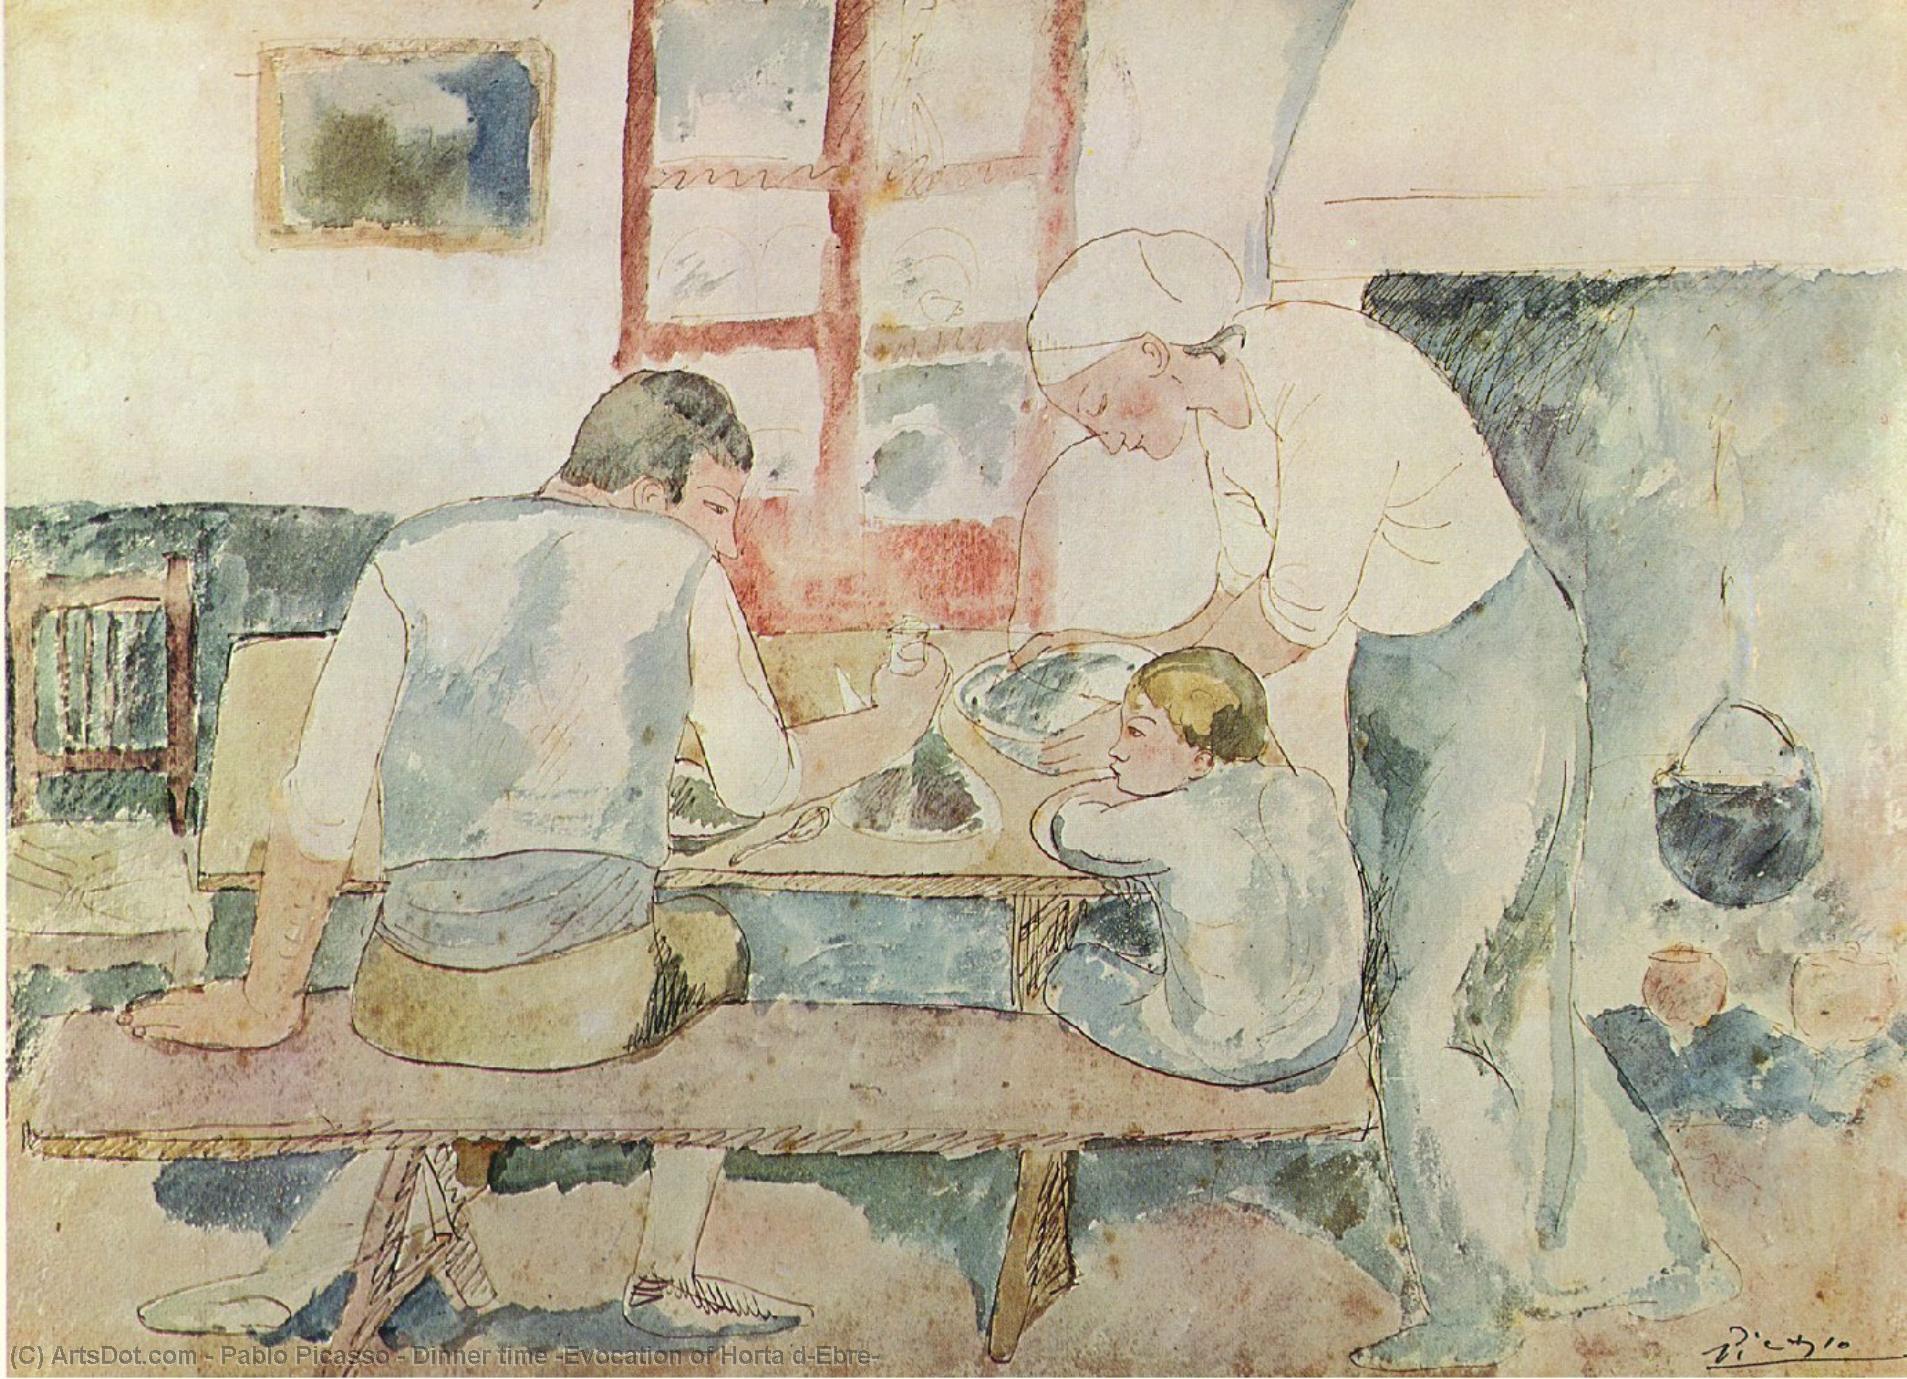 Wikioo.org - Encyklopedia Sztuk Pięknych - Malarstwo, Grafika Pablo Picasso - Dinner time (Evocation of Horta d'Ebre)